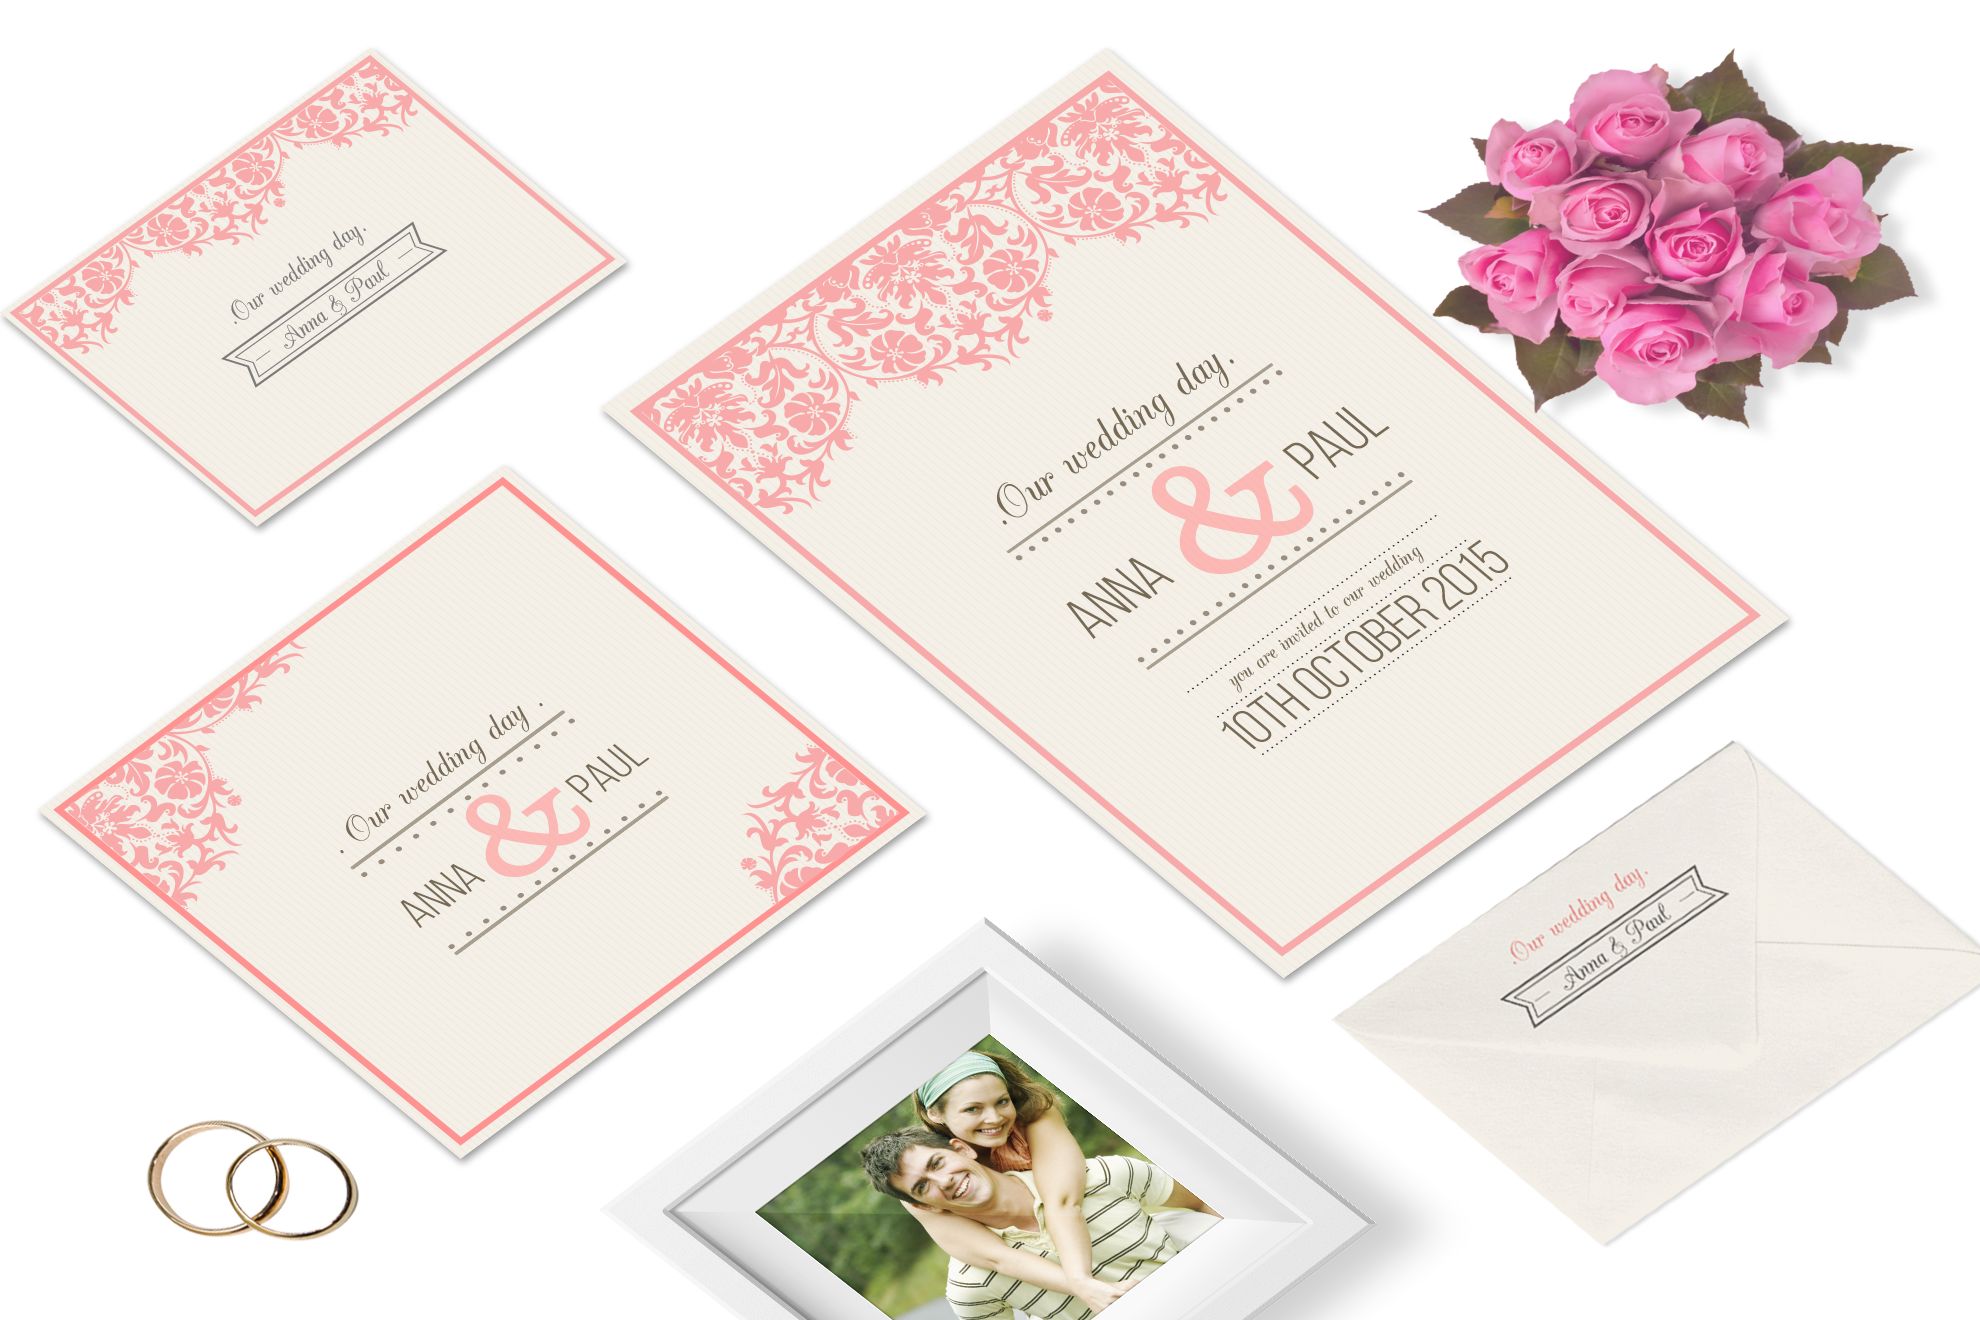 Print wedding booklets and invitations: Print booklets and wedding invitations in a few and simple …